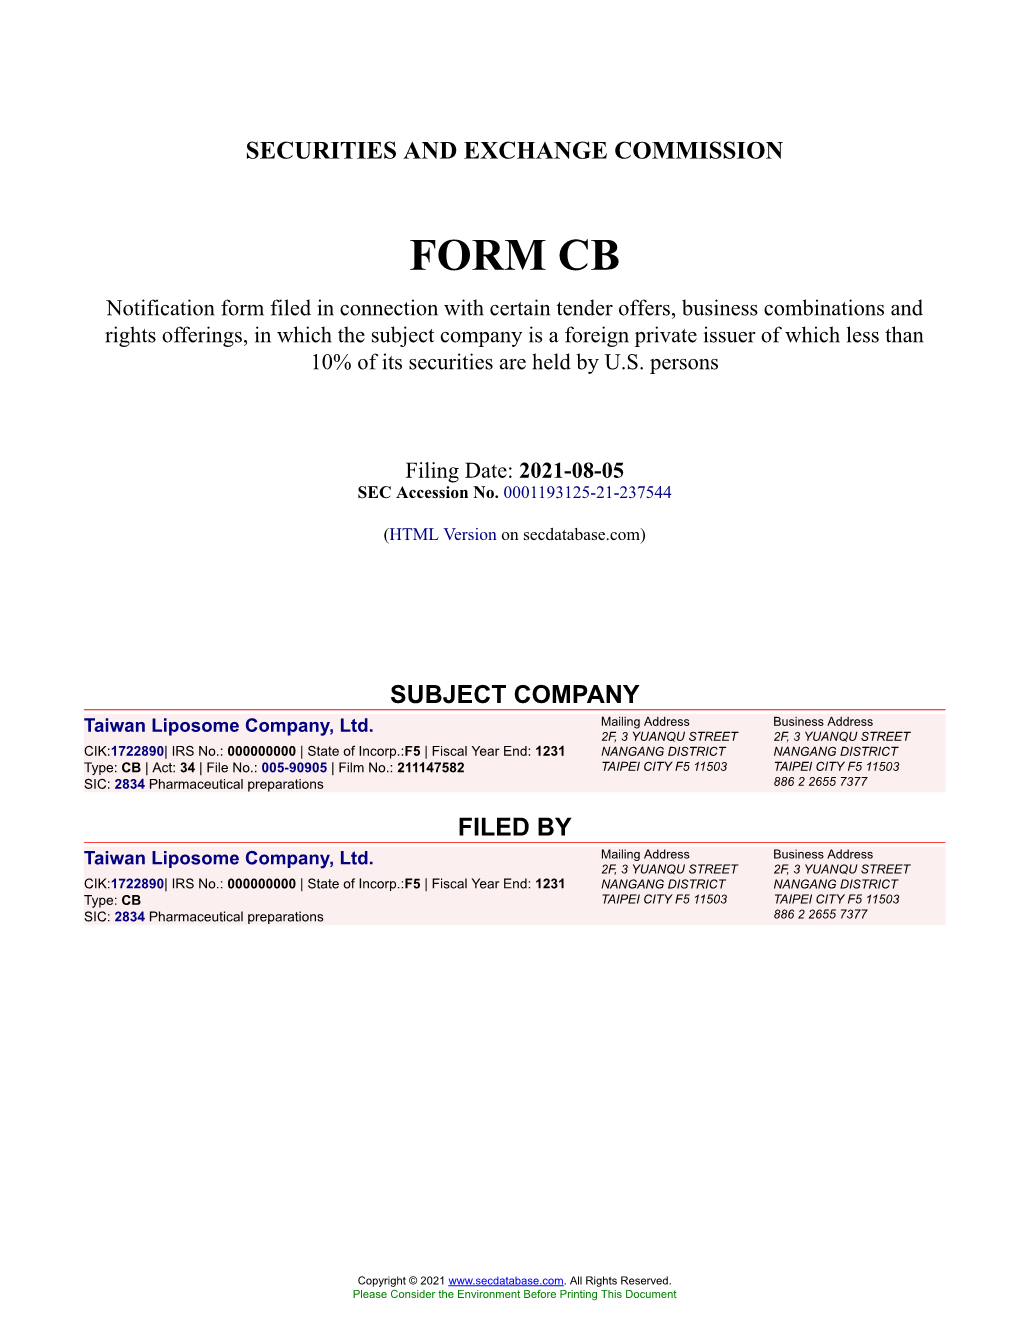 Taiwan Liposome Company, Ltd. Form CB Filed 2021-08-05